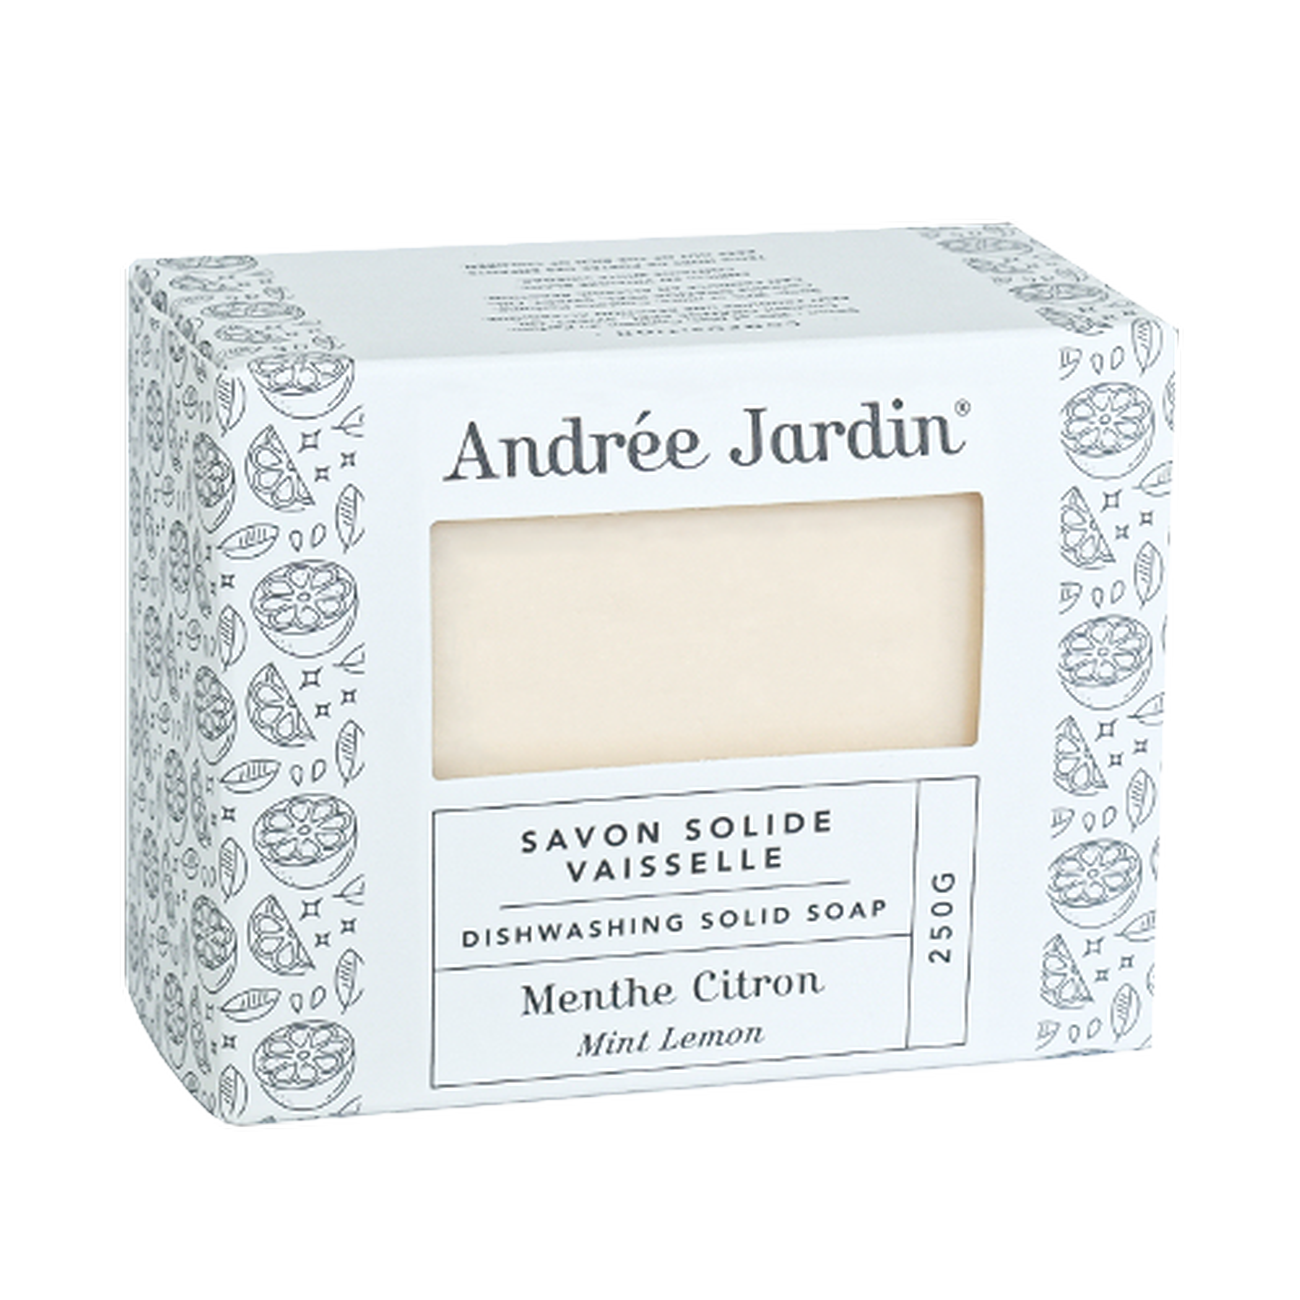 andree-jardin-solid-soap-dishwashing-mint-lemon-250g - Andree Jardin Solid Dishwashing Soap 250g Mint Lemon